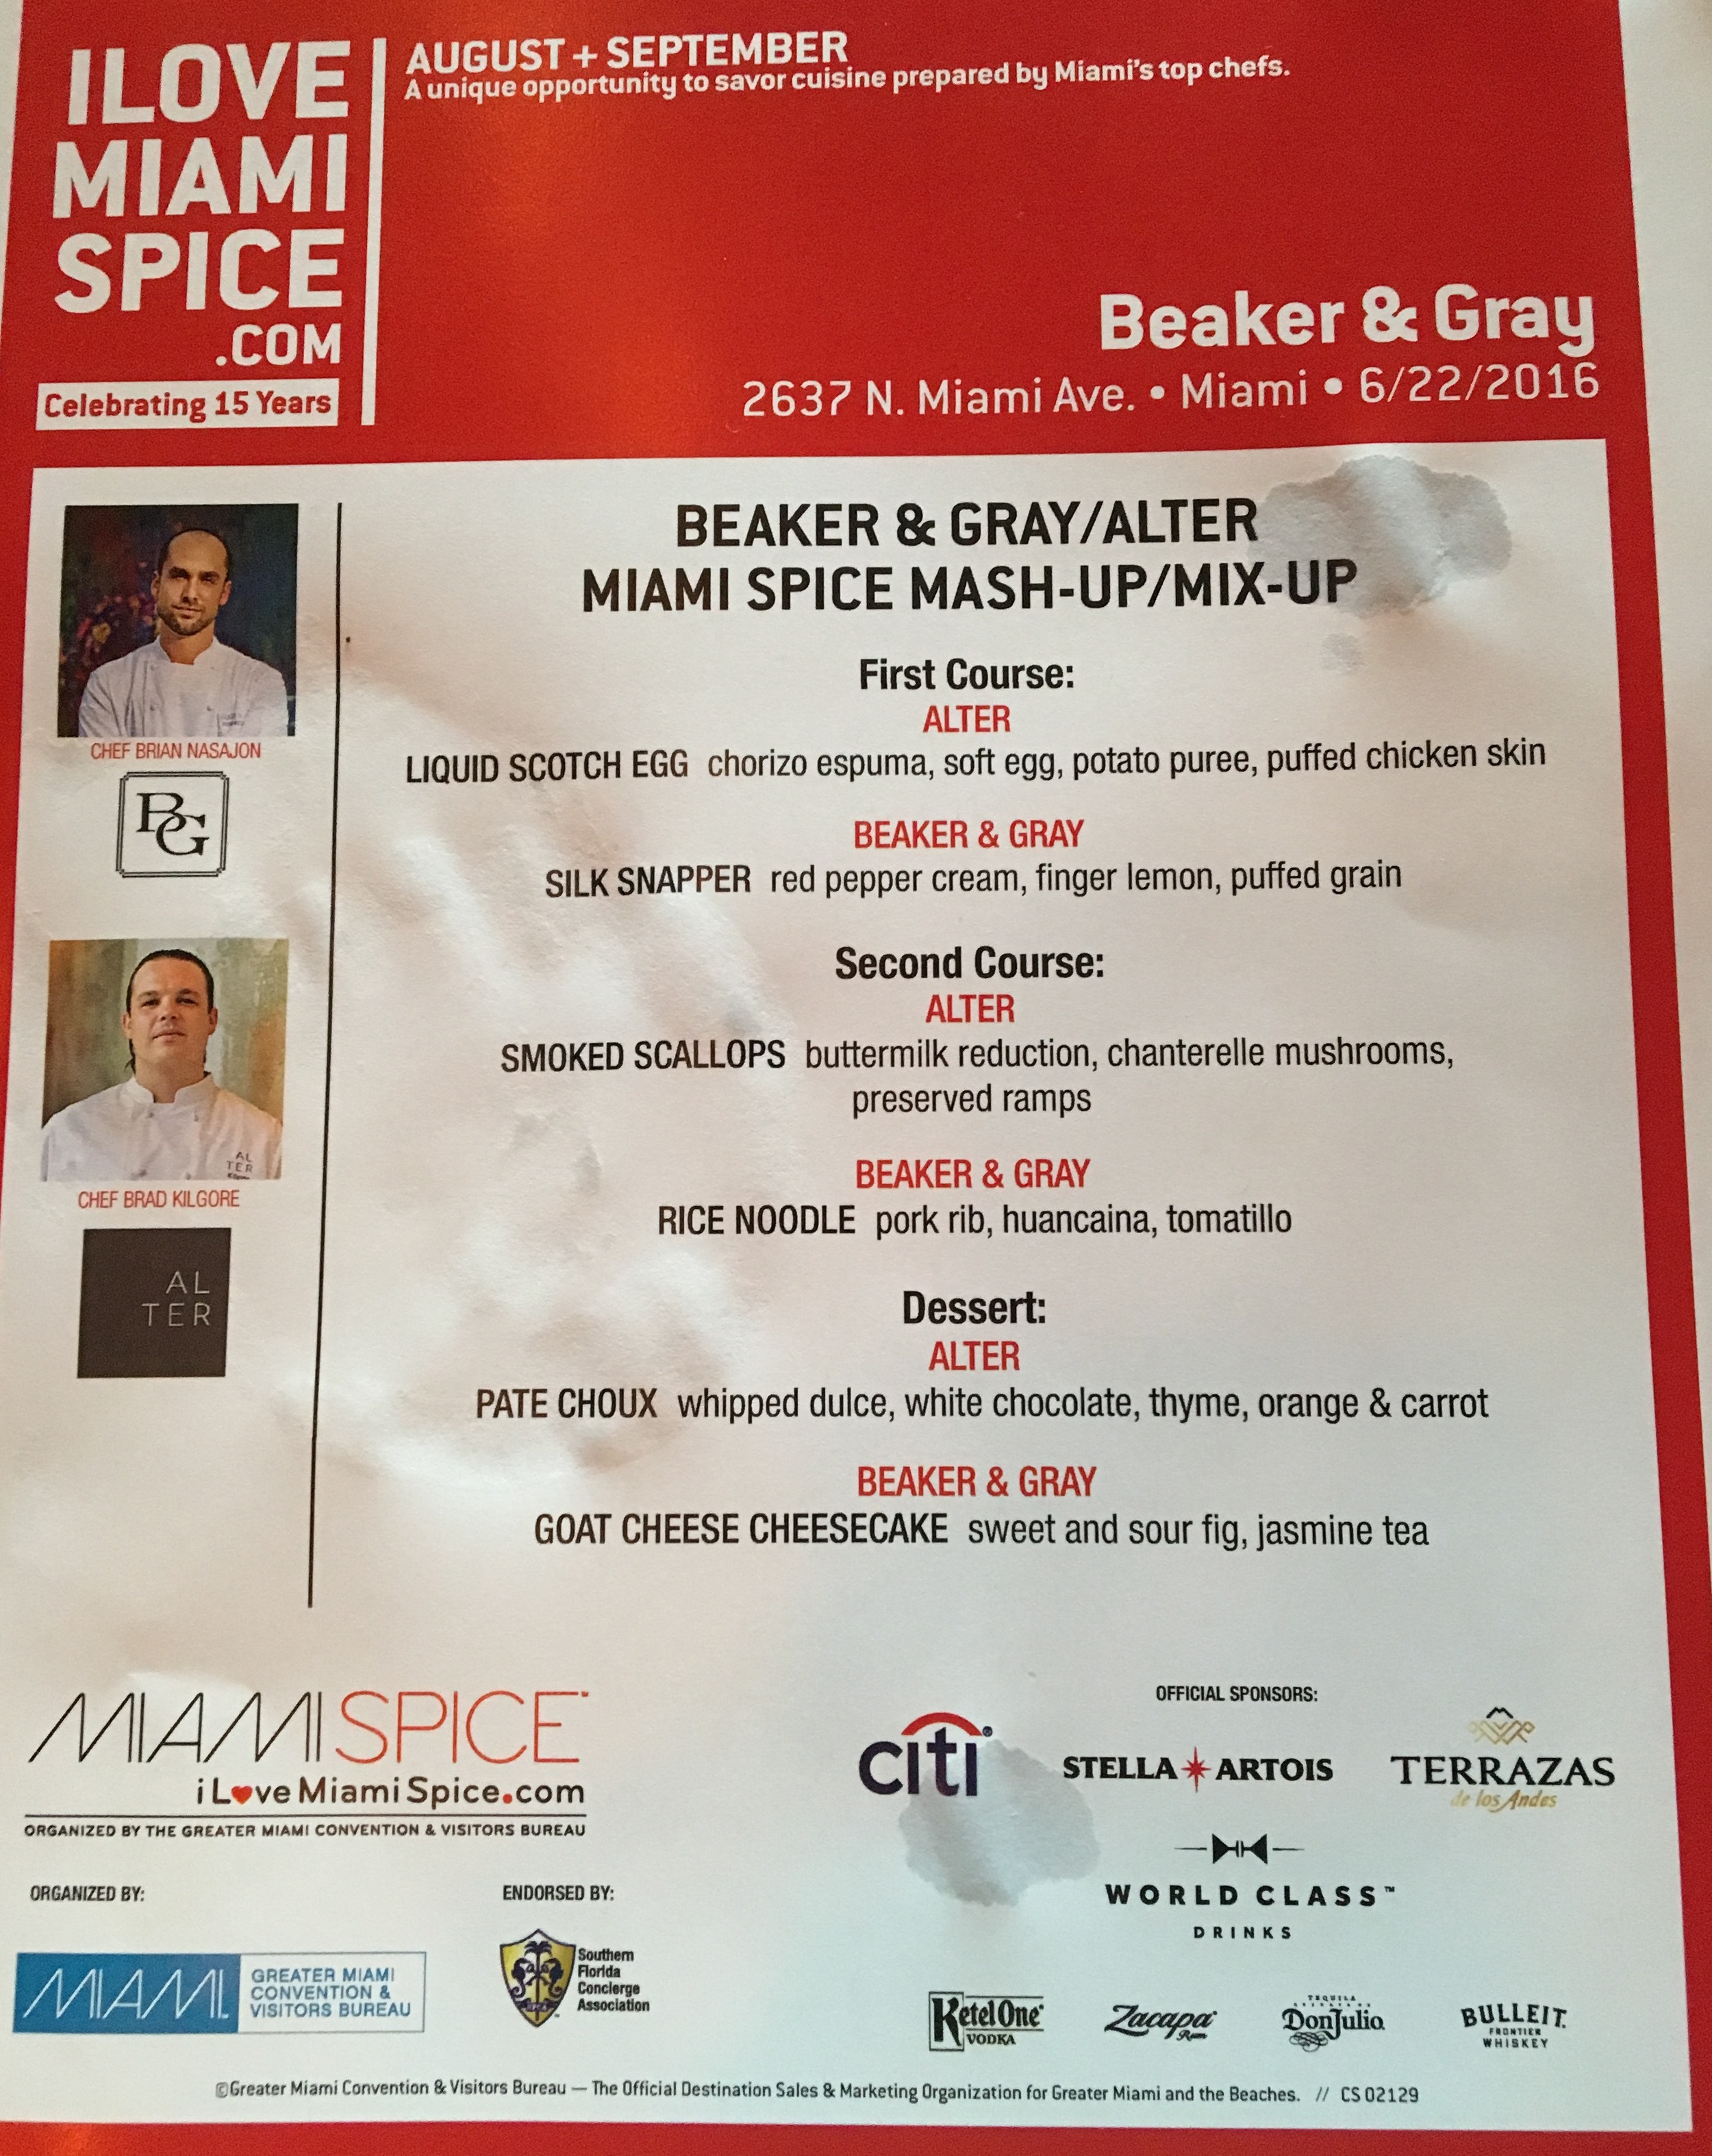 https://images.squarespace-cdn.com/content/v1/53236388e4b07b2197464417/1468418874299-GSRDJ95N9TRHT9BA85PH/Miami+Spice+Mashup+menu